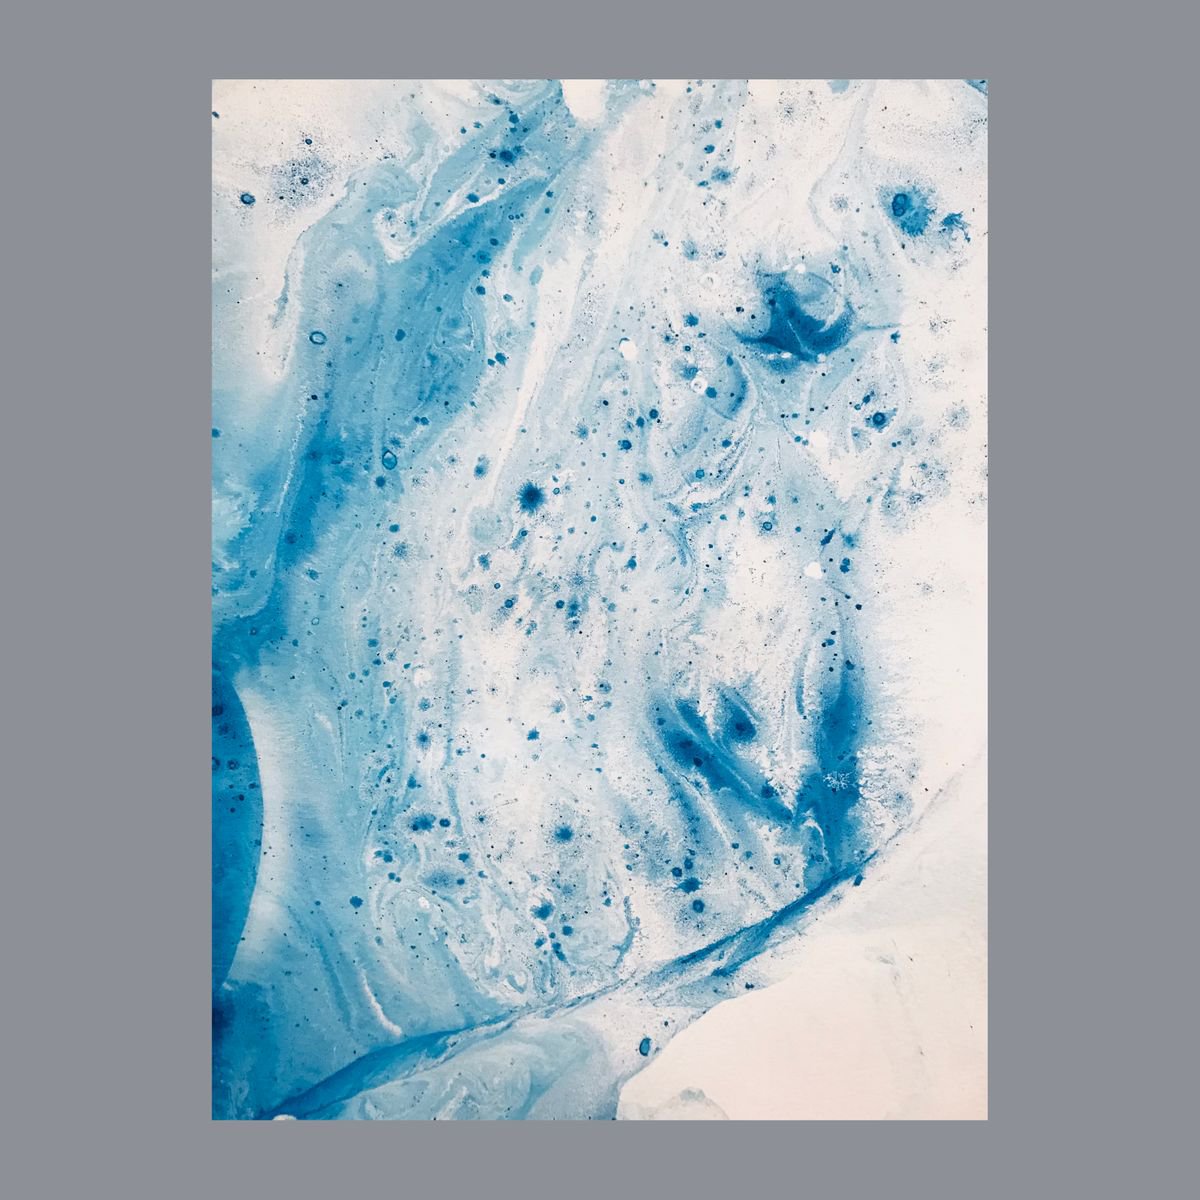 Blue fluid abstract 080820191 by Natalya Burgos